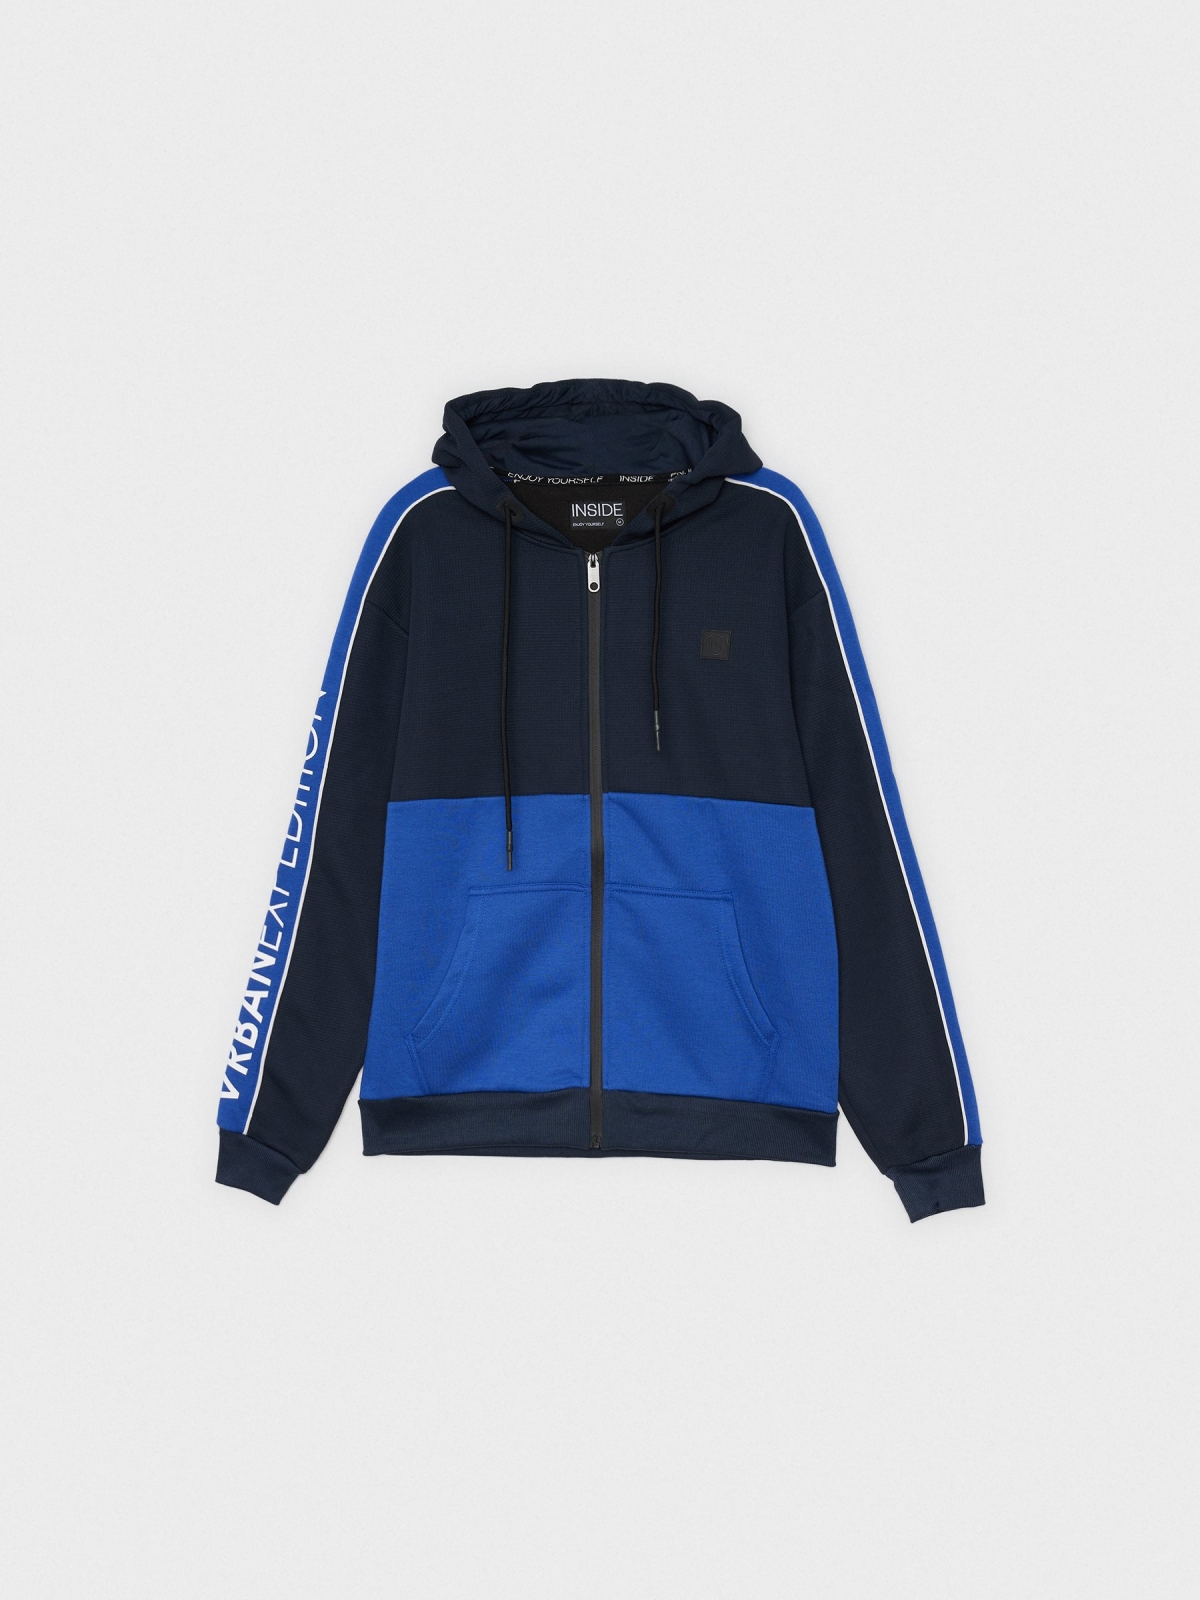  Zipper sweatshirt with text dark blue